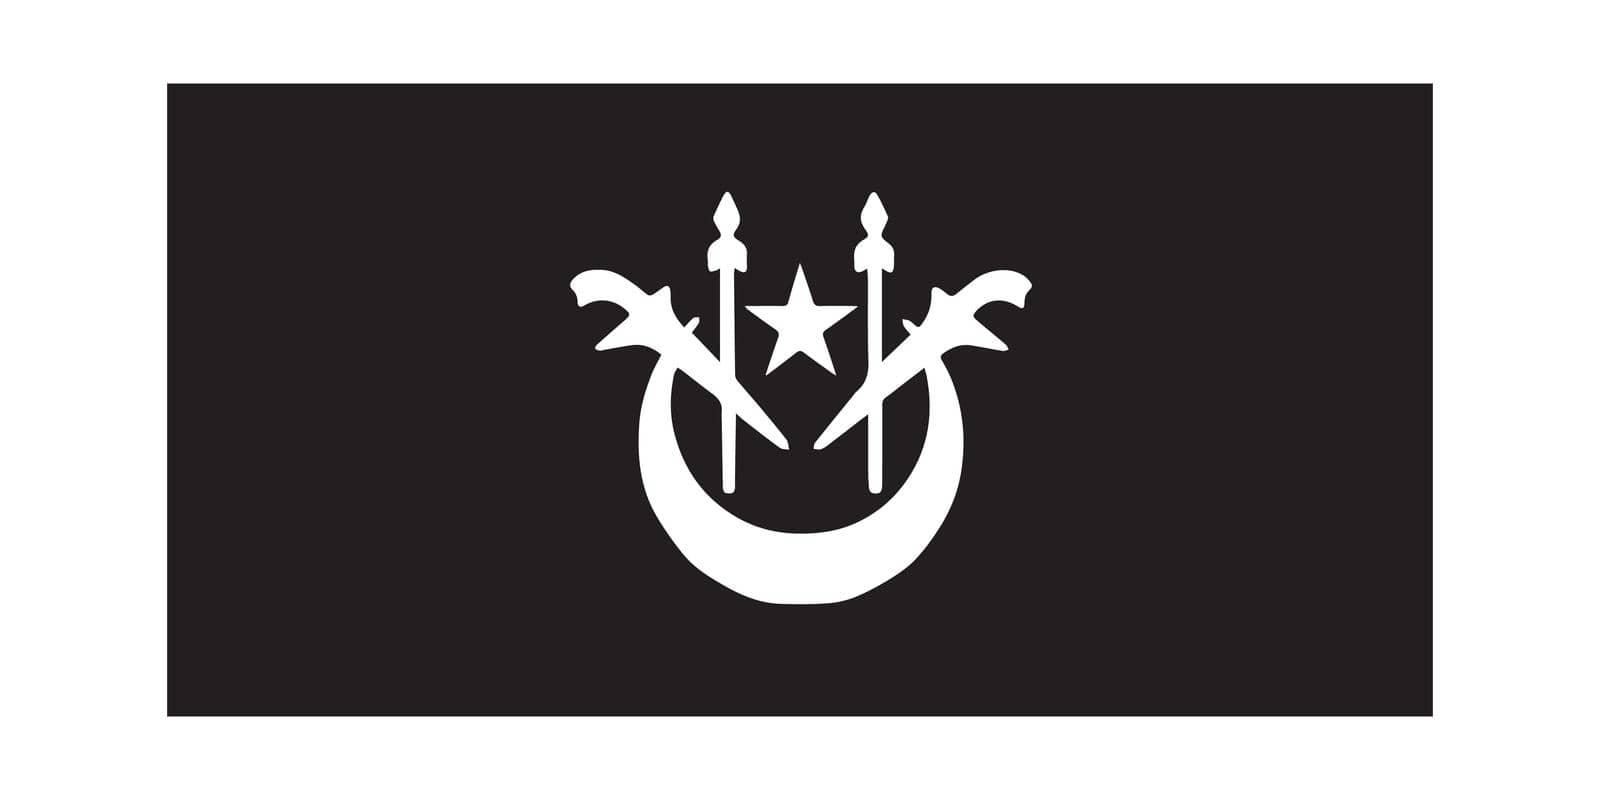 Flag of Kelantan State Malaysia. Kelantan Darul Naim State Flag Australia. Black and white EPS Vector File.